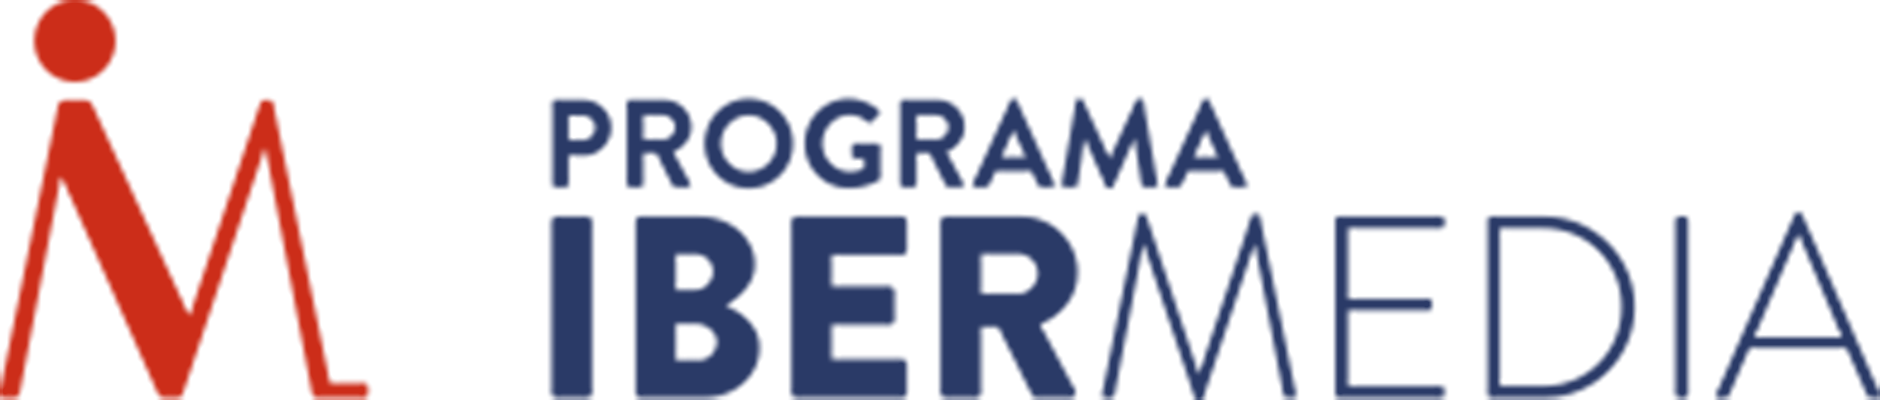 Programa Ibermedia - company